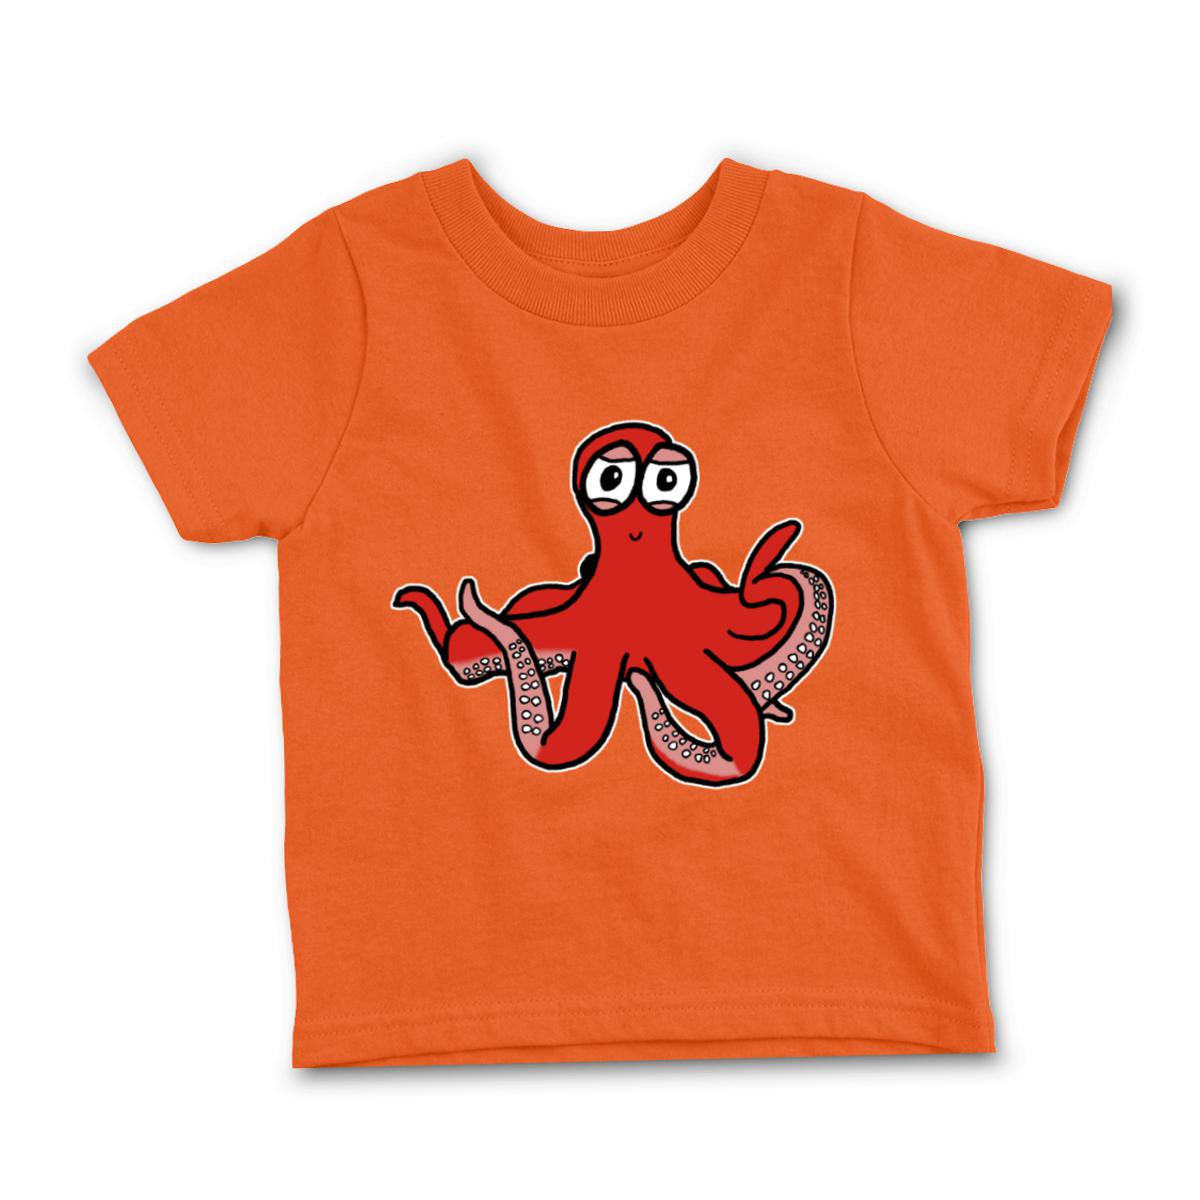 Octopus Infant Tee 12M orange